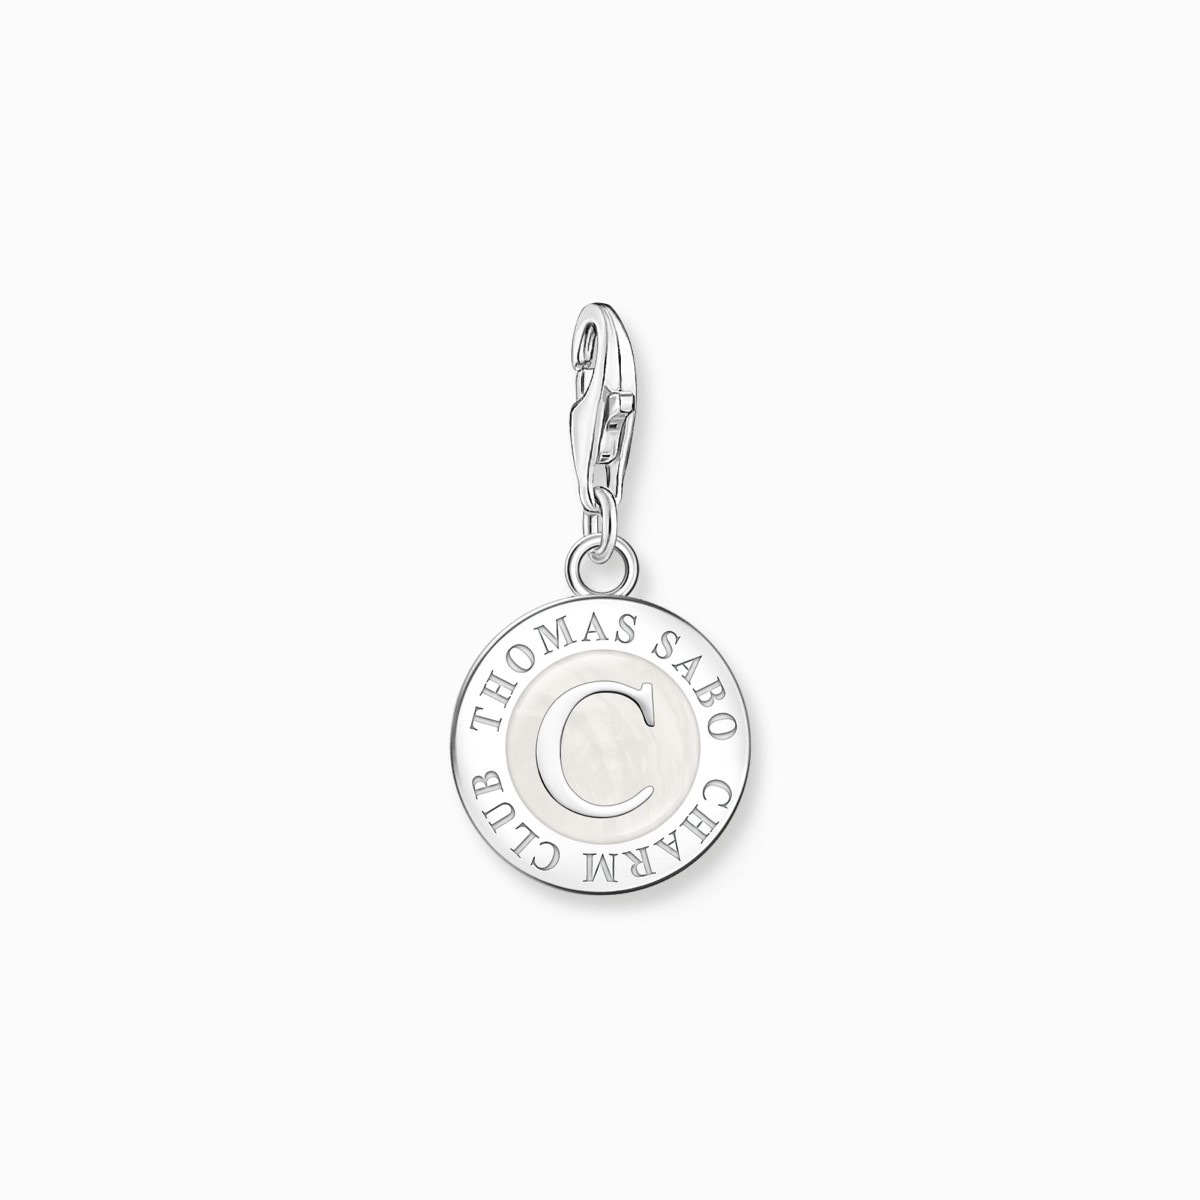 Photos - Other Jewellery Thomas Sabo Charm Pendant - White Charmista Silver Coin Member Charm 